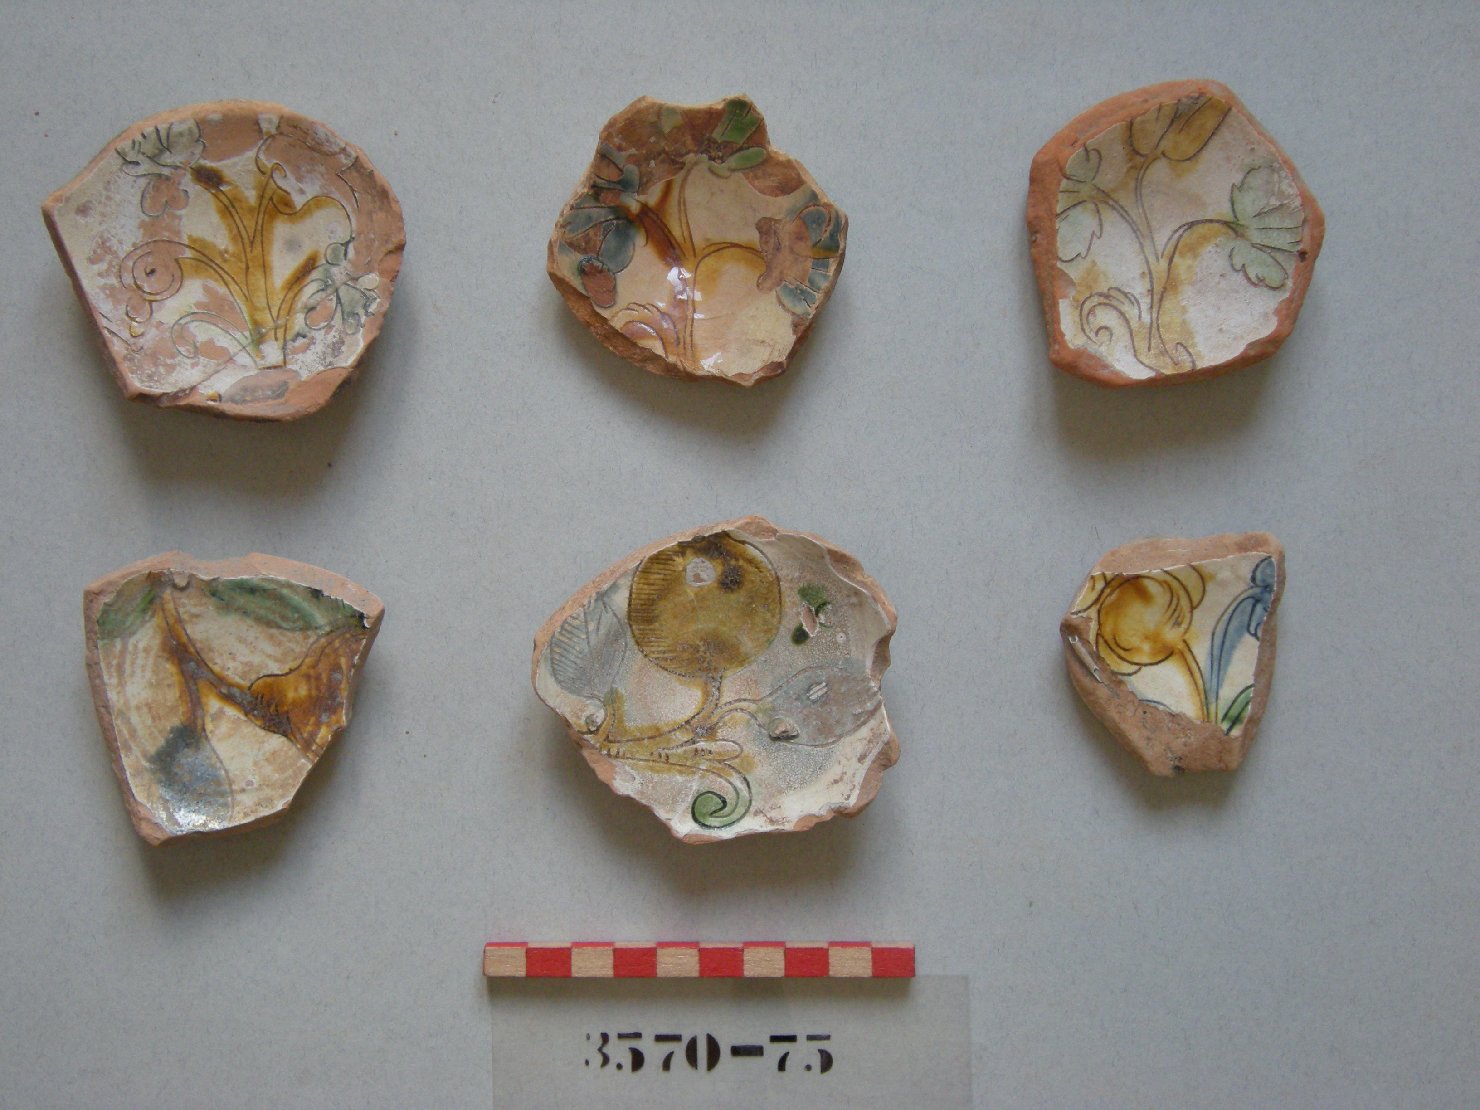 motivi decorativi vegetali (piatto, frammento) - ambito veneziano (secc. XVI/ XVII)